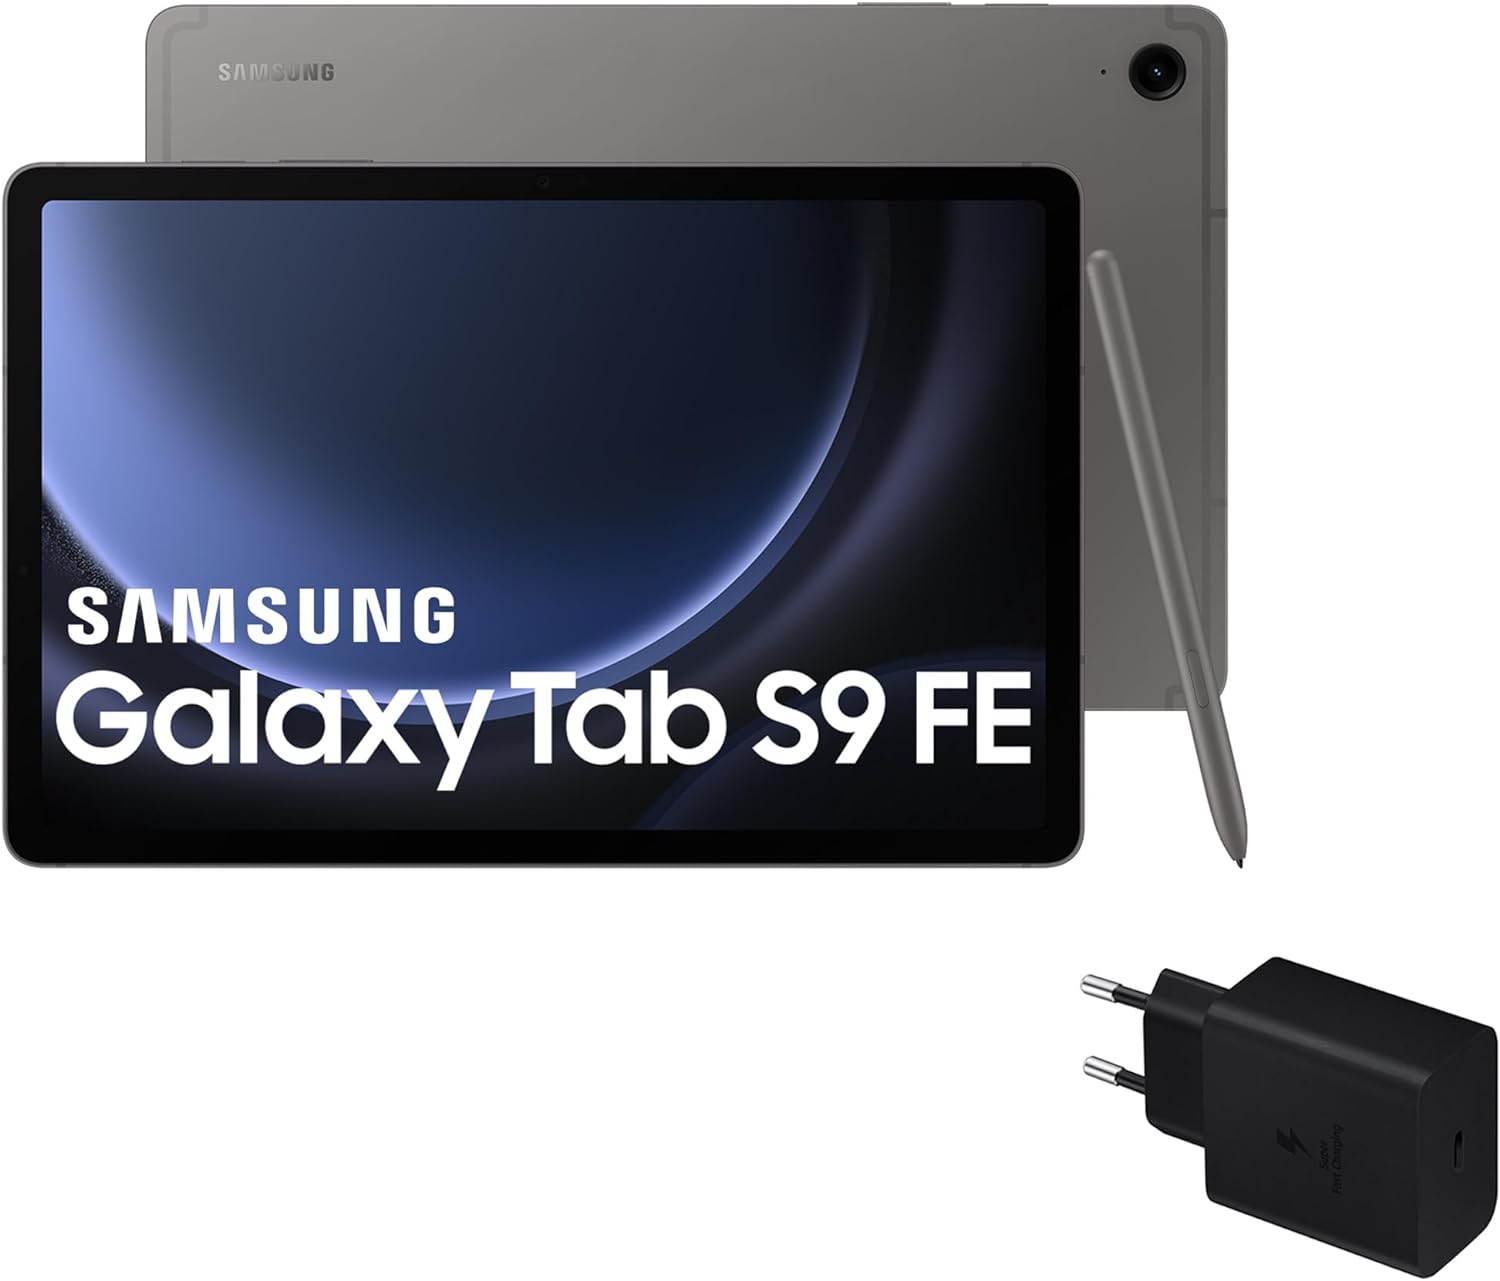 Samsung Galaxy Tab S9 FE vs Samsung Galaxy Tab S9 FE+ vs Samsung Galaxy Tab S9